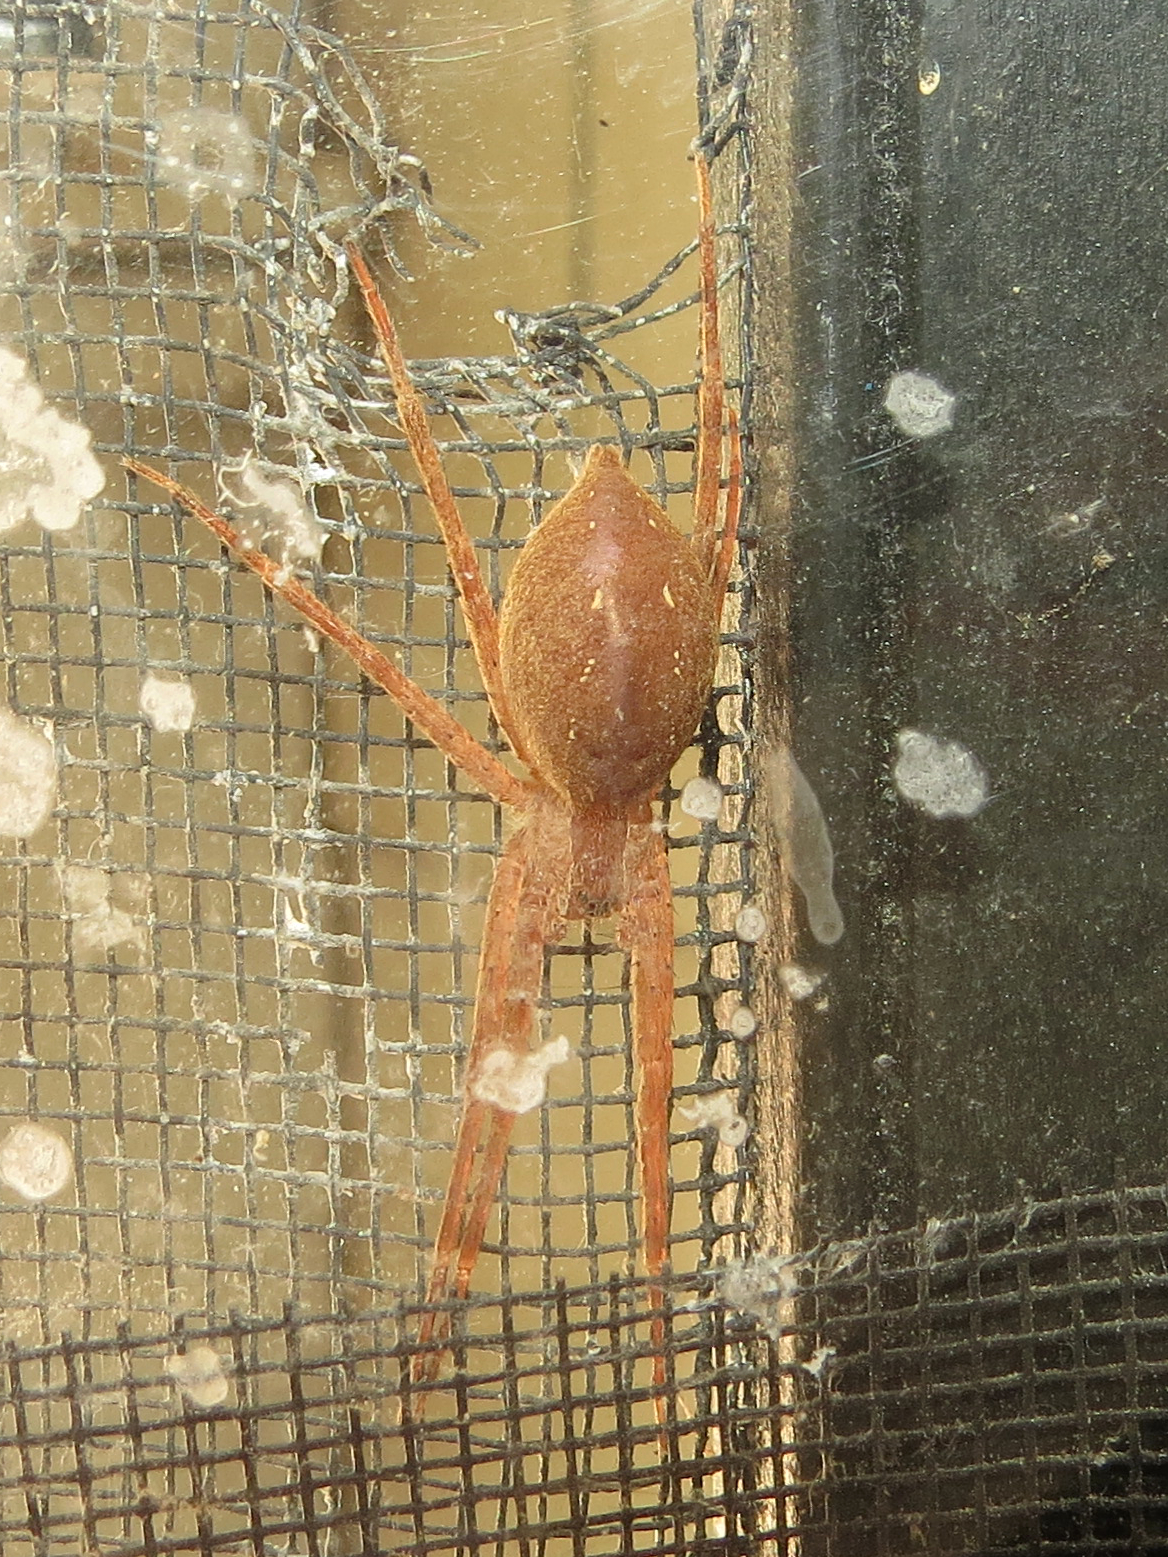 Gravid Nursery Web Spider (Pisaurina mira)